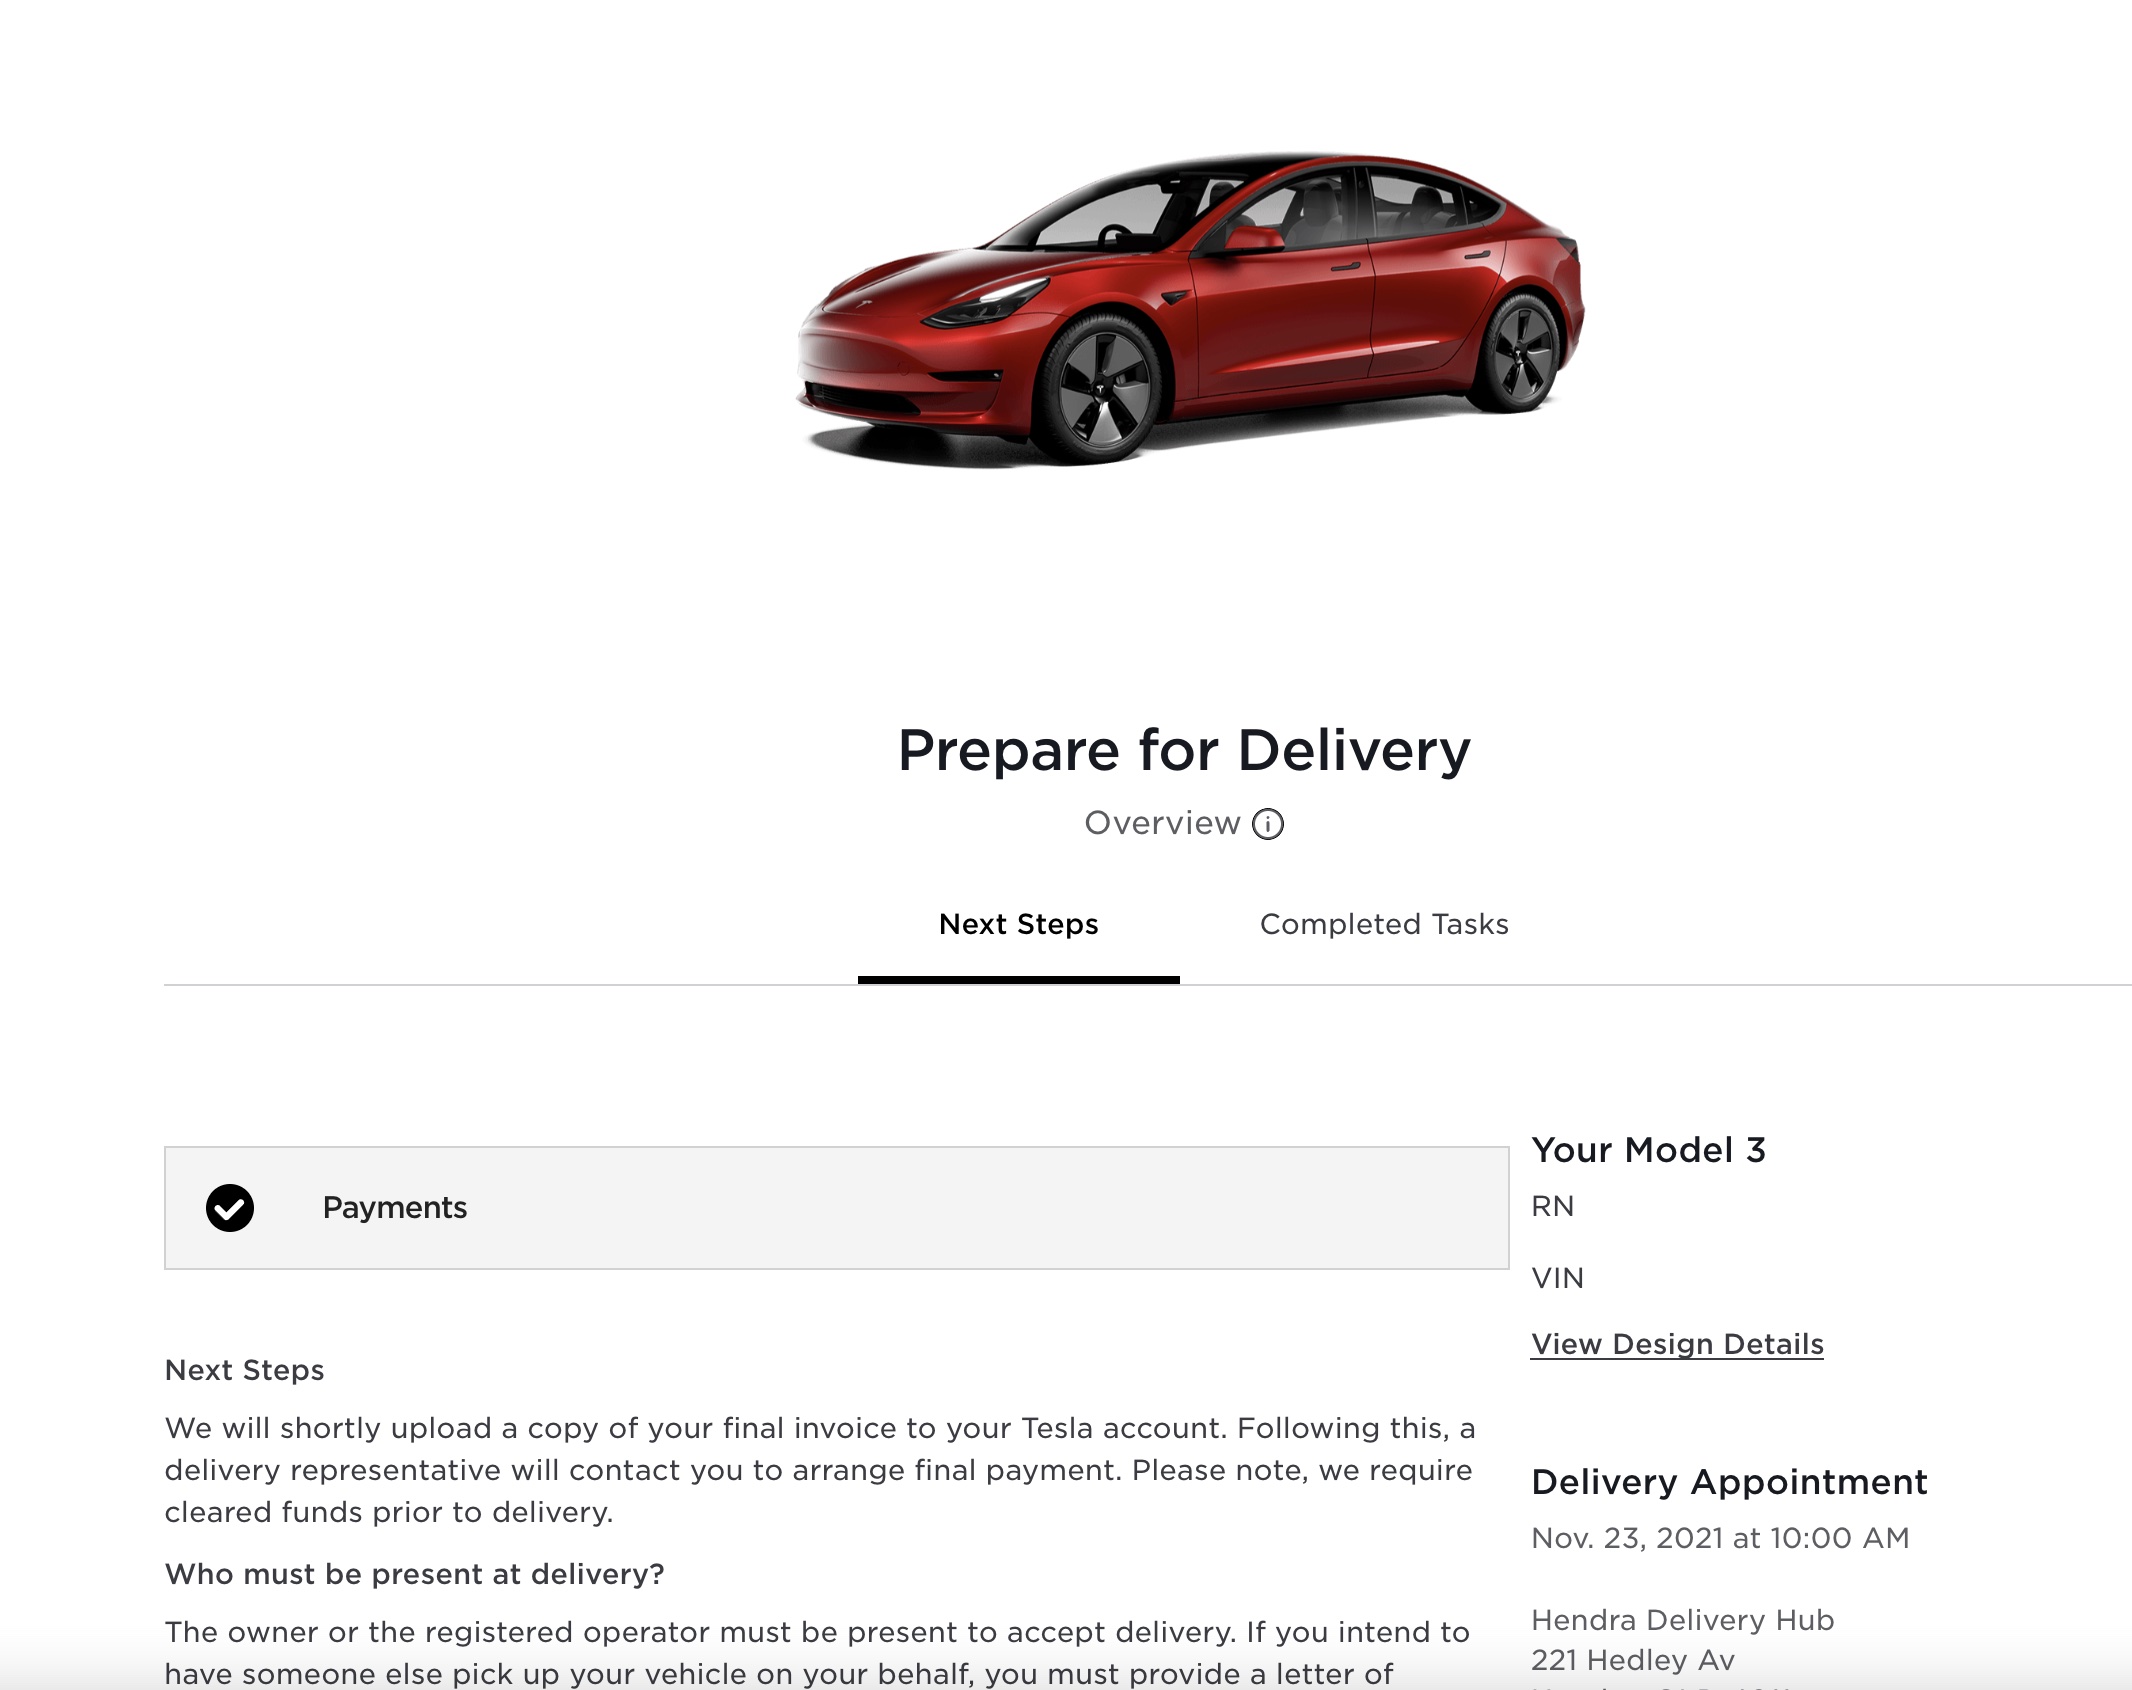 Tesla Delivery Confirmed